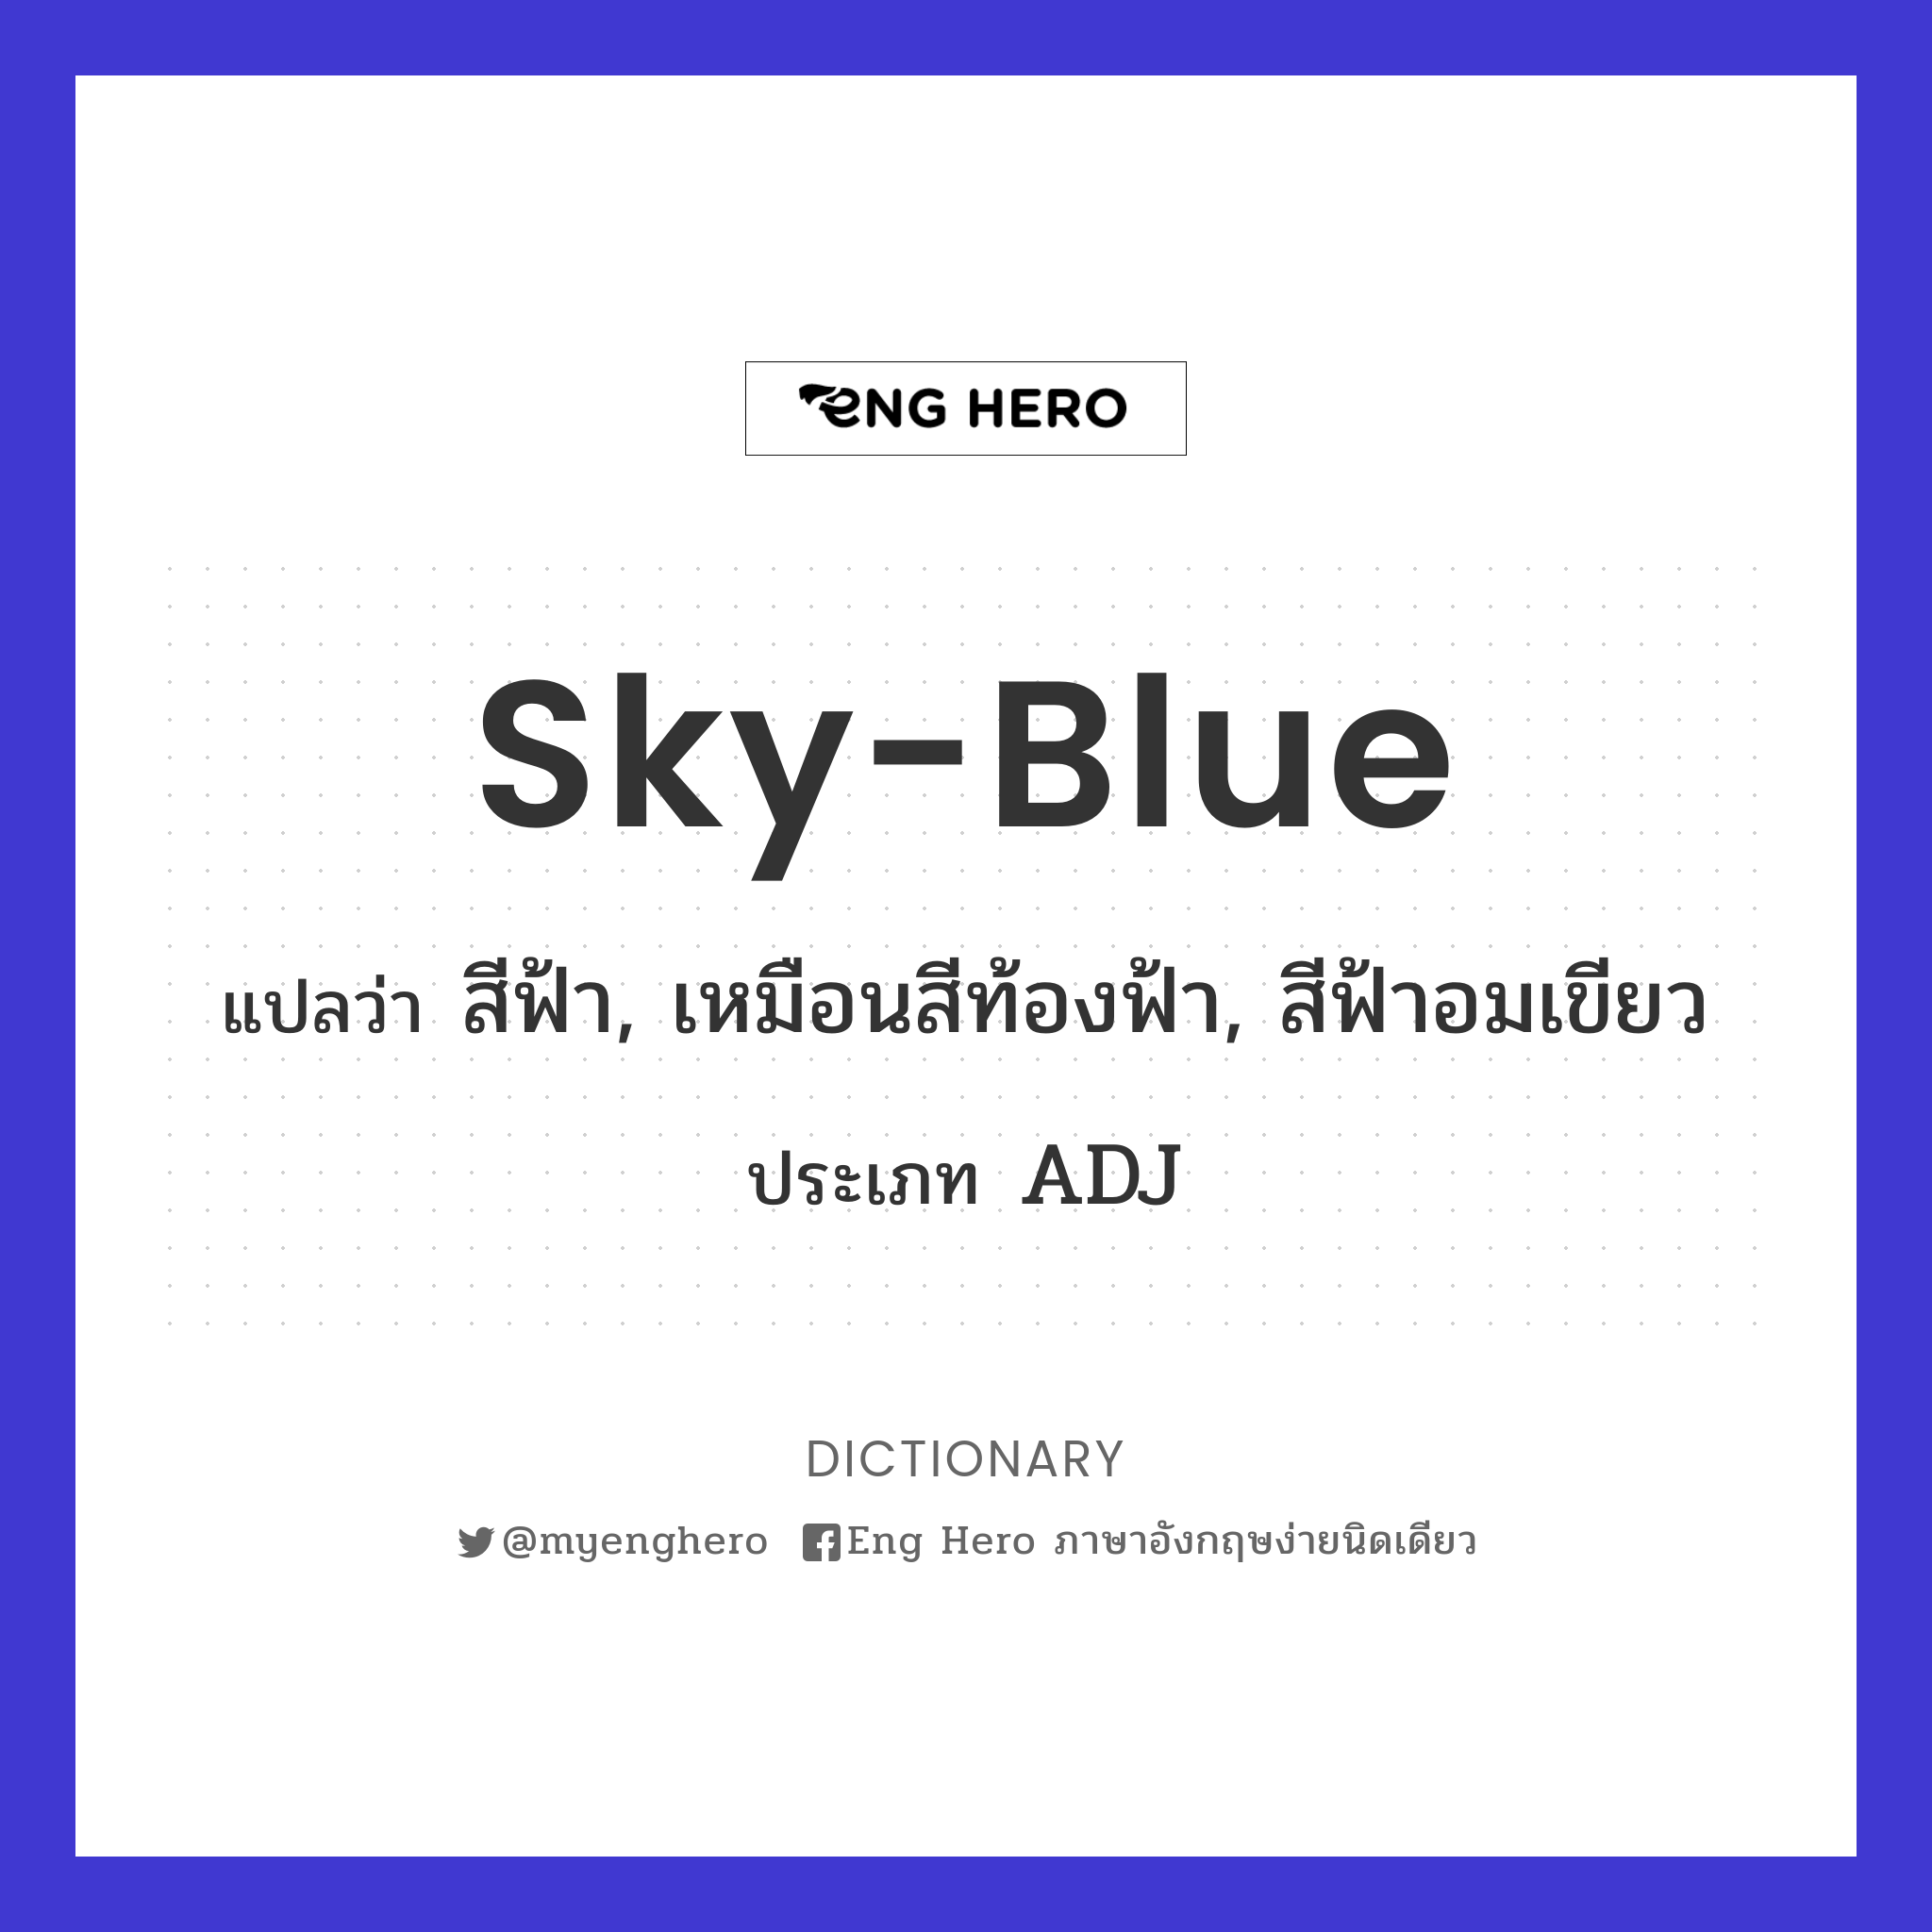 Sky-Blue แปลว่า สีฟ้า, เหมือนสีท้องฟ้า, สีฟ้าอมเขียว | Eng Hero เรียน ภาษาอังกฤษ ออนไลน์ ฟรี